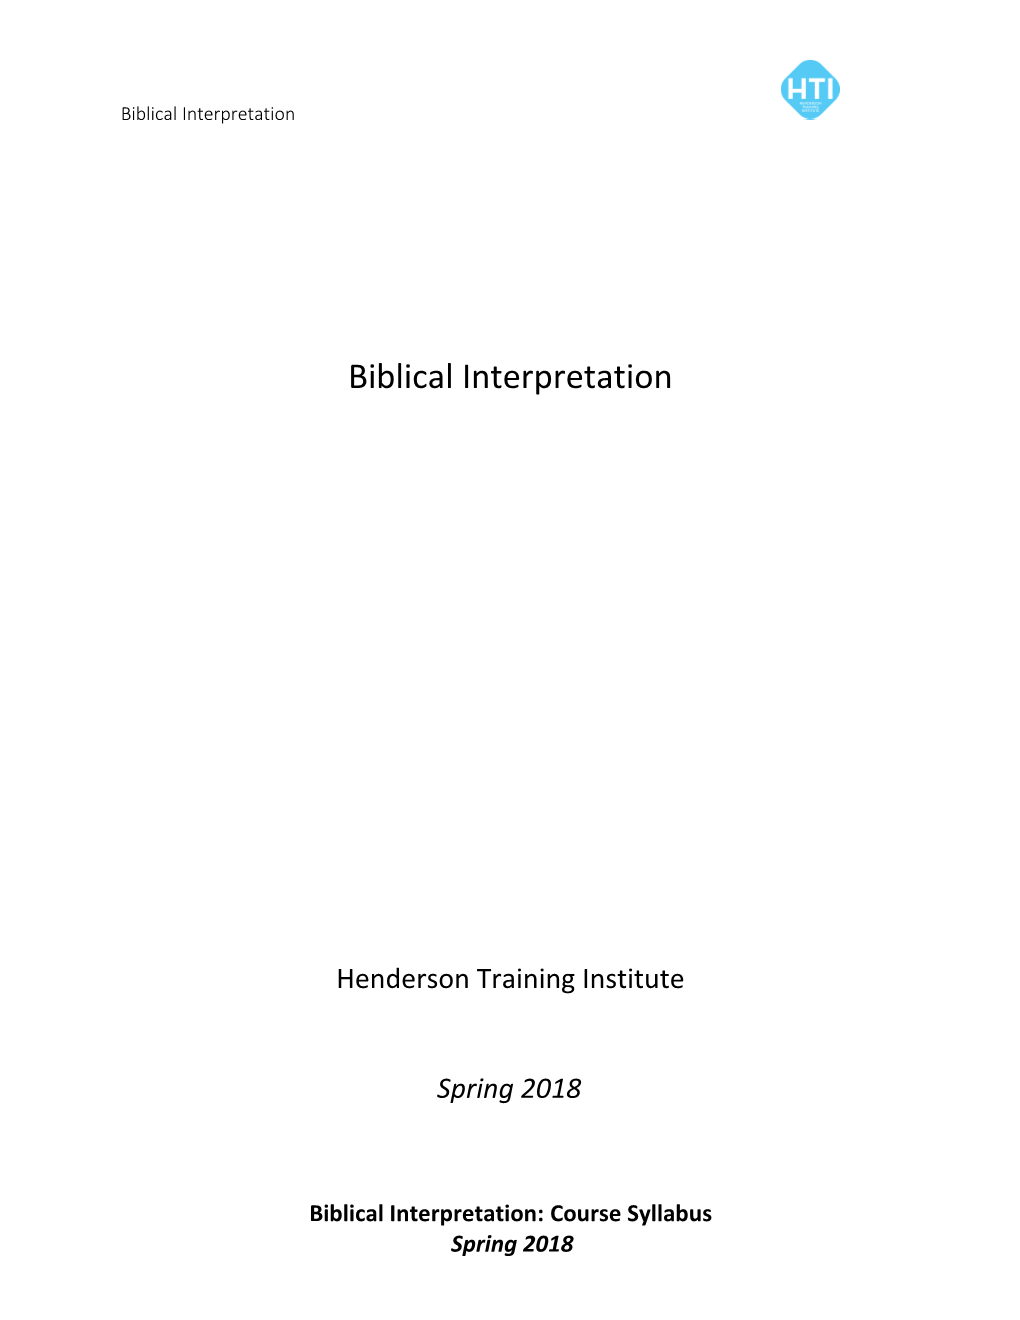 Biblical Interpretation: Course Syllabus